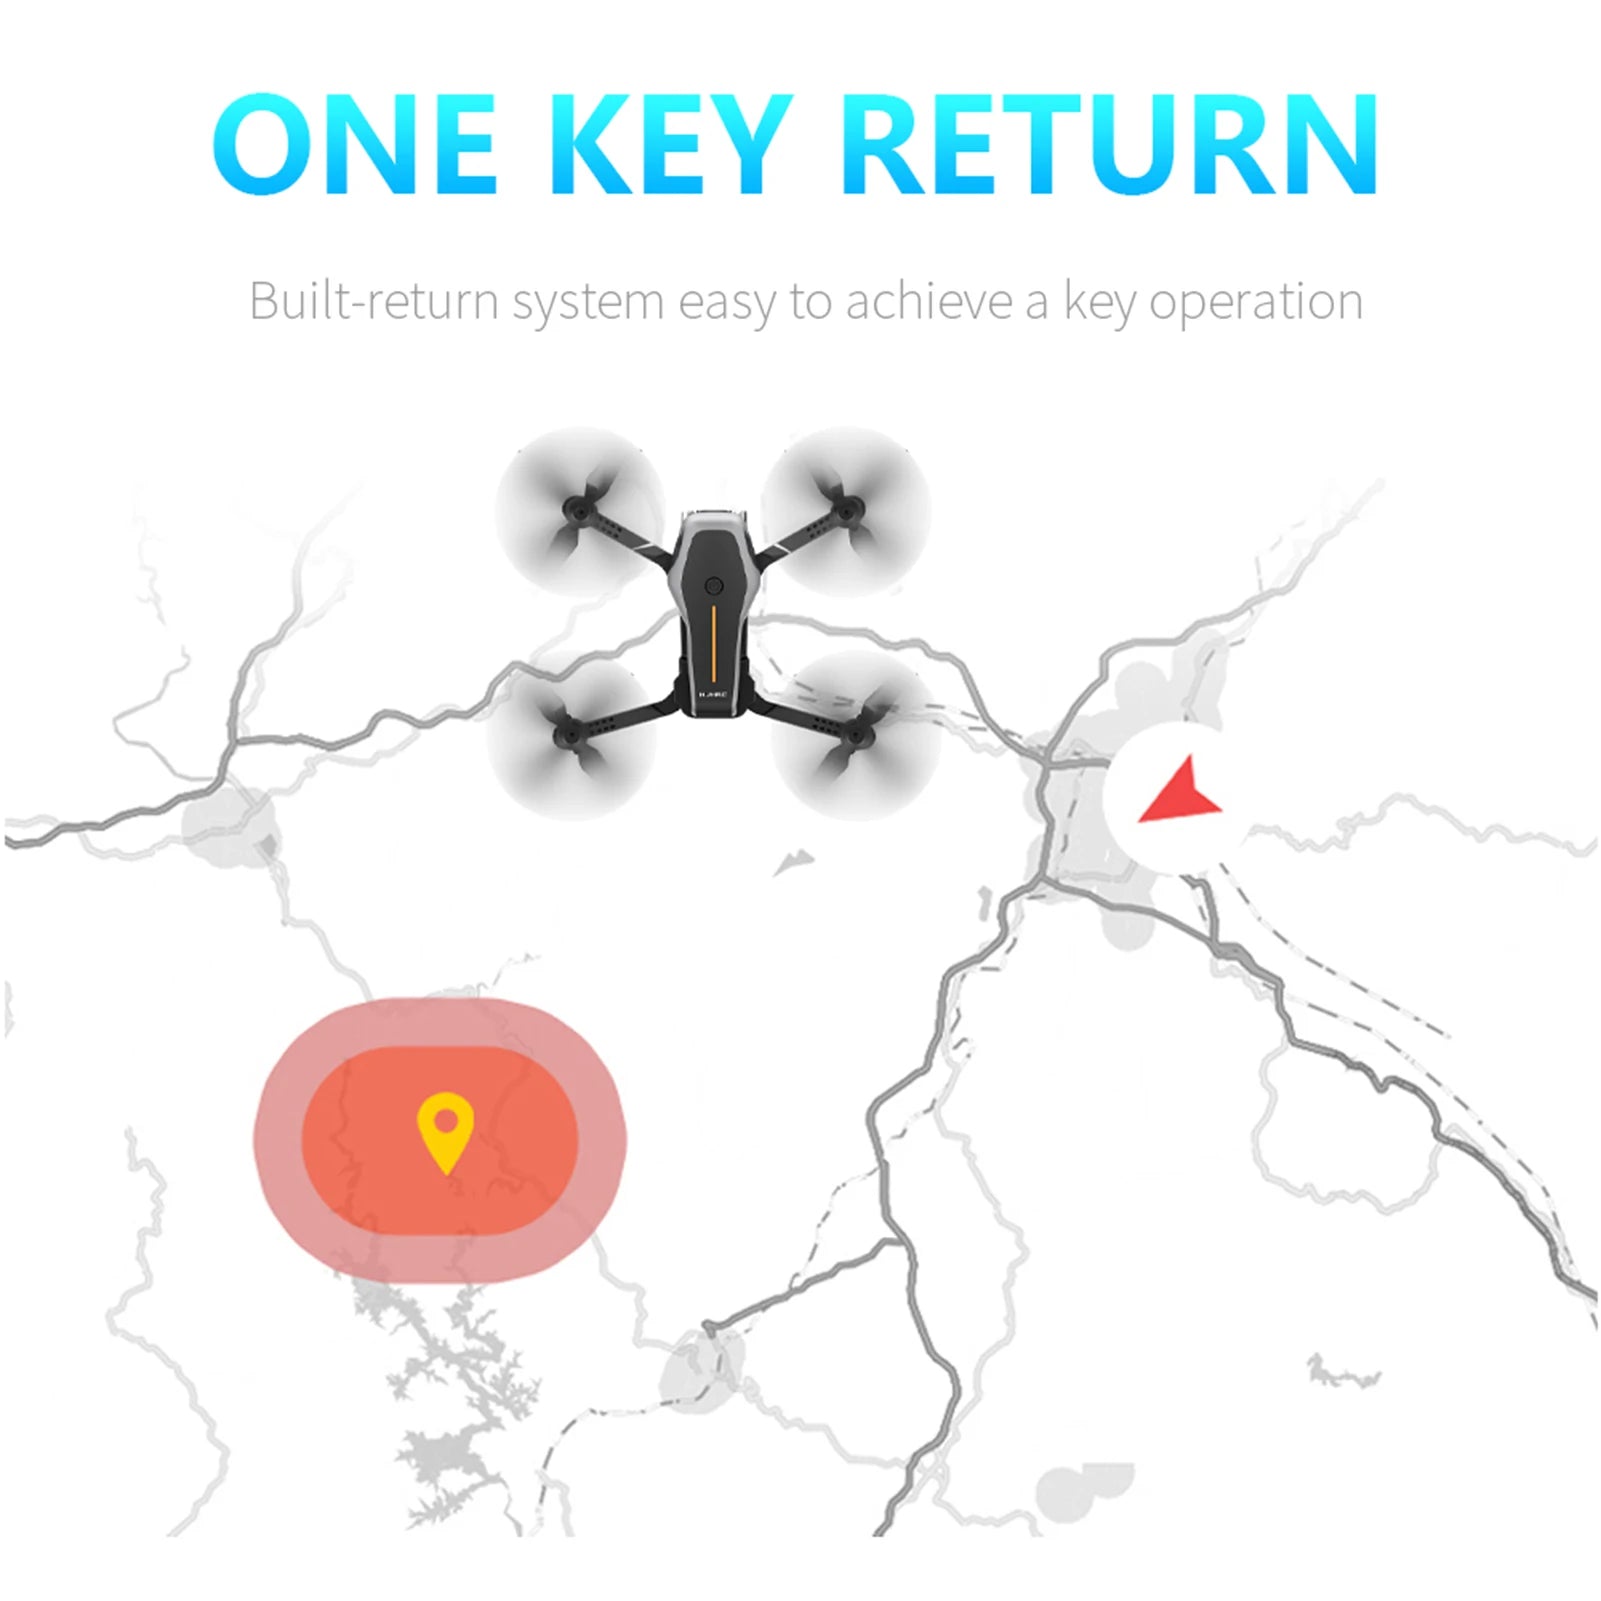 HJ95 Drone, one key return built-return system easy to achieve a operation